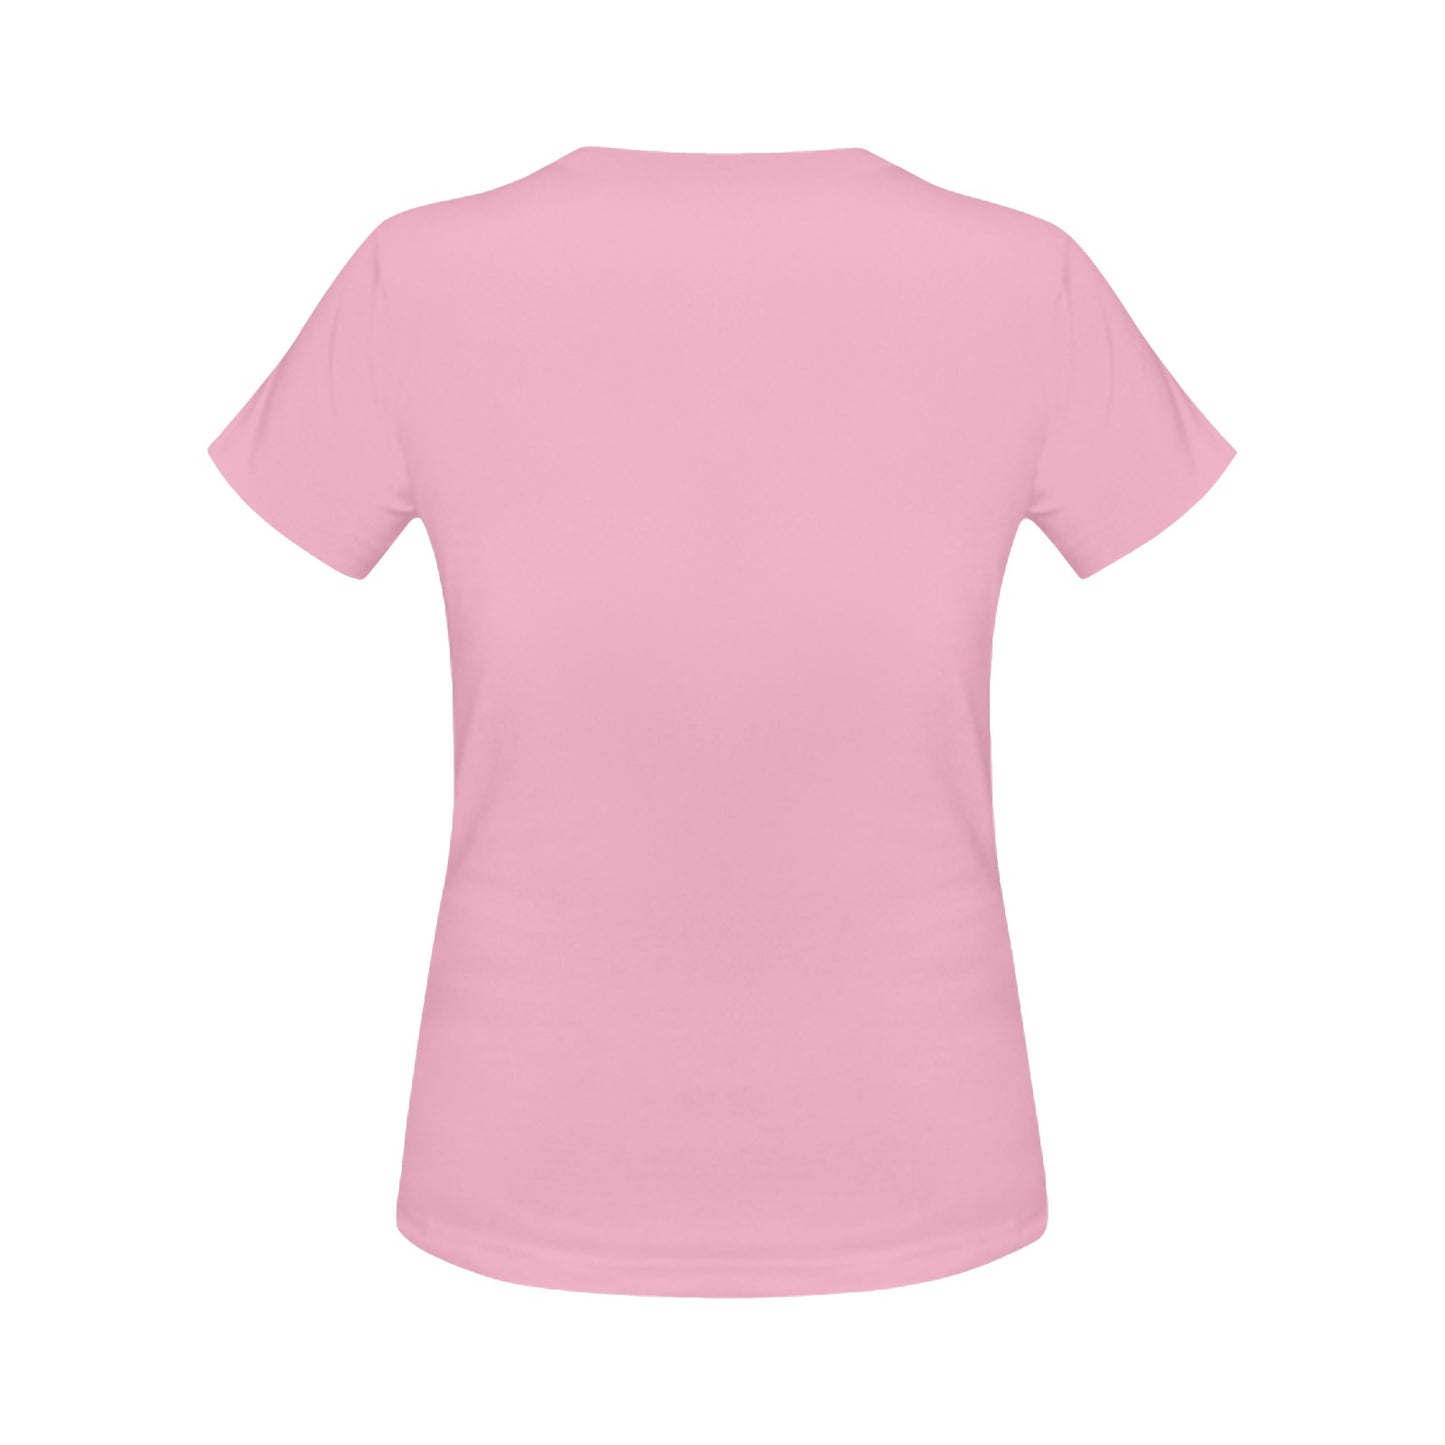 Flamingo Life® Pink Groovy Women's T-shirt